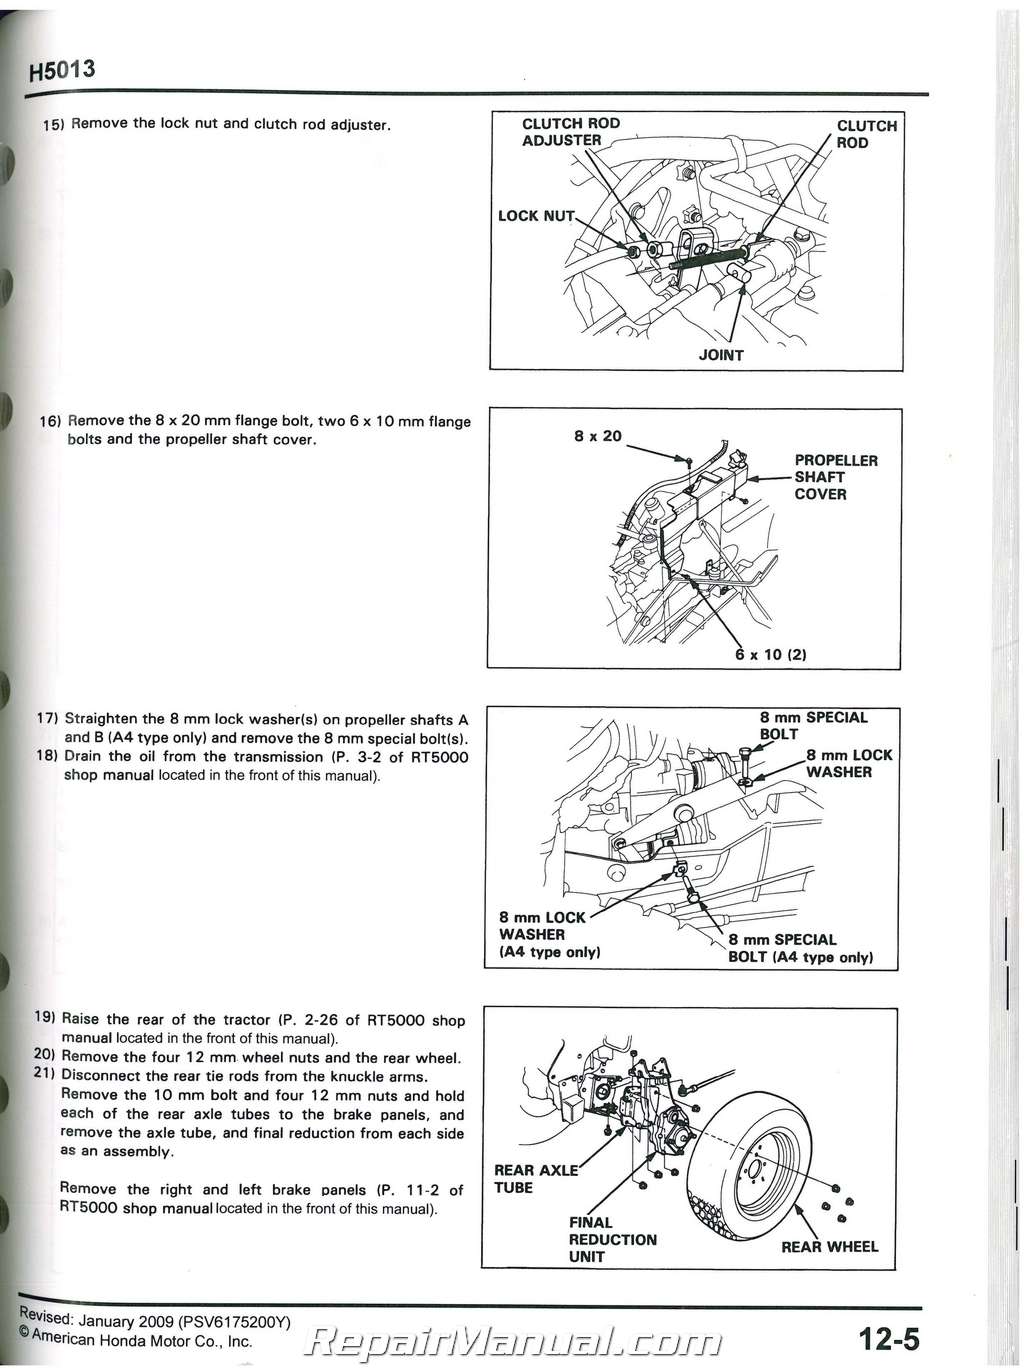 Honda H5013 Rt5000 Lawn Tractor Shop Manual   6175200e3